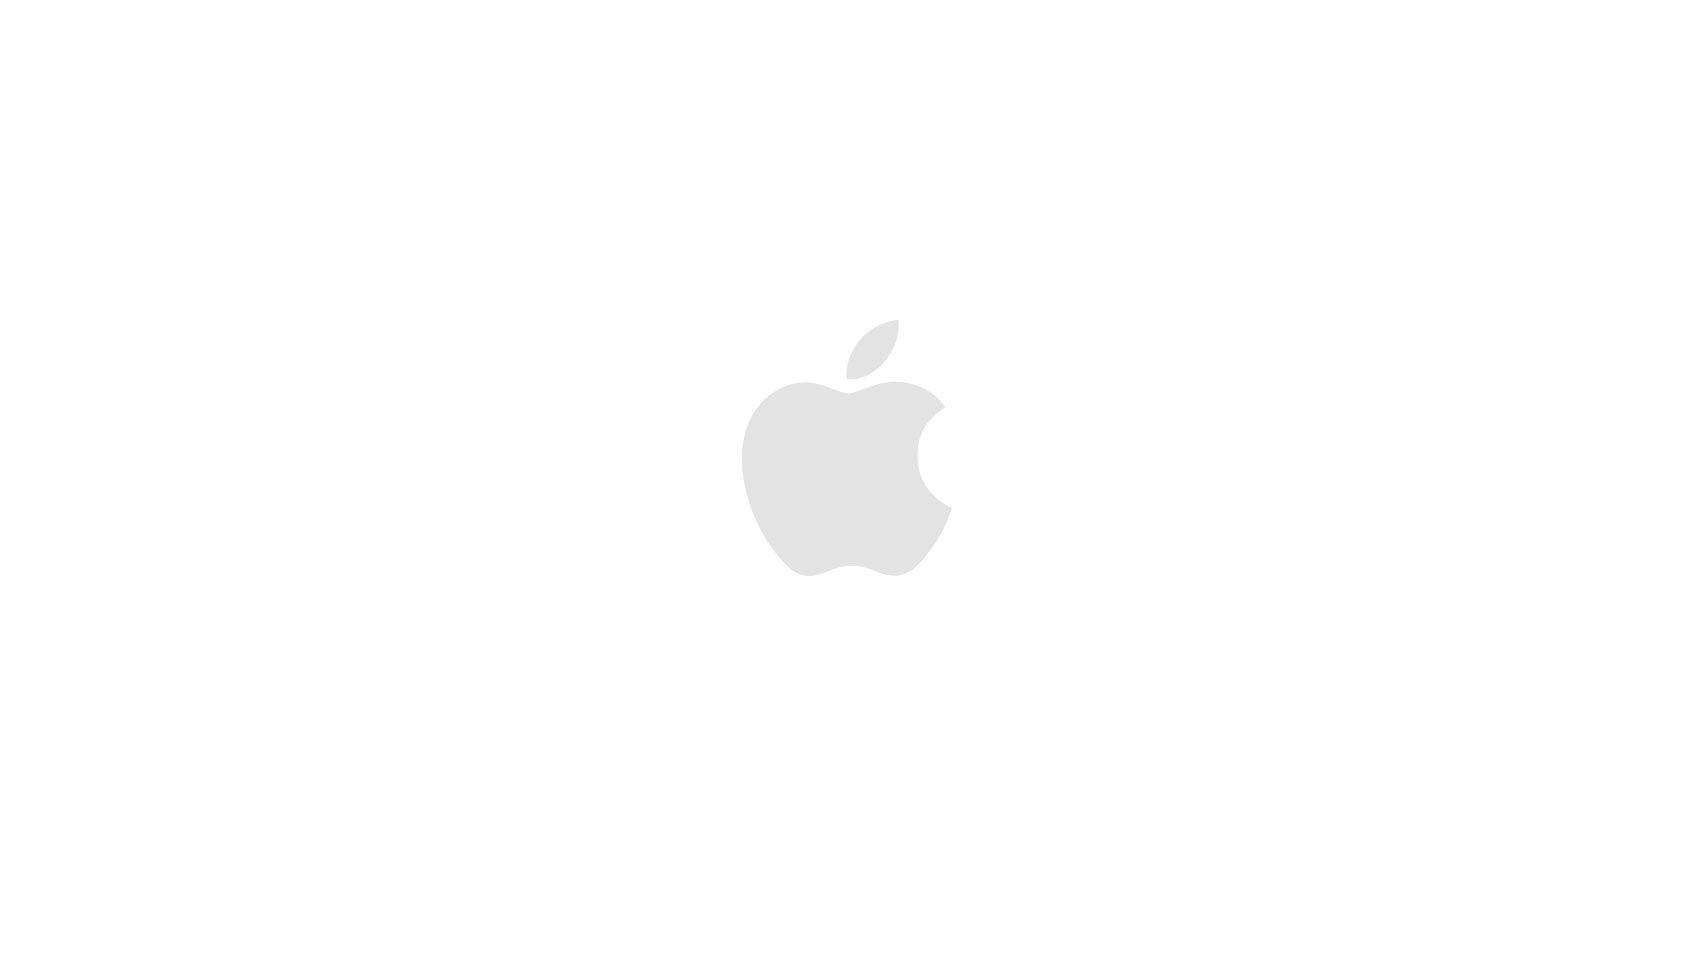 2014 Apple Company Logo - Inclusion & Diversity - Apple